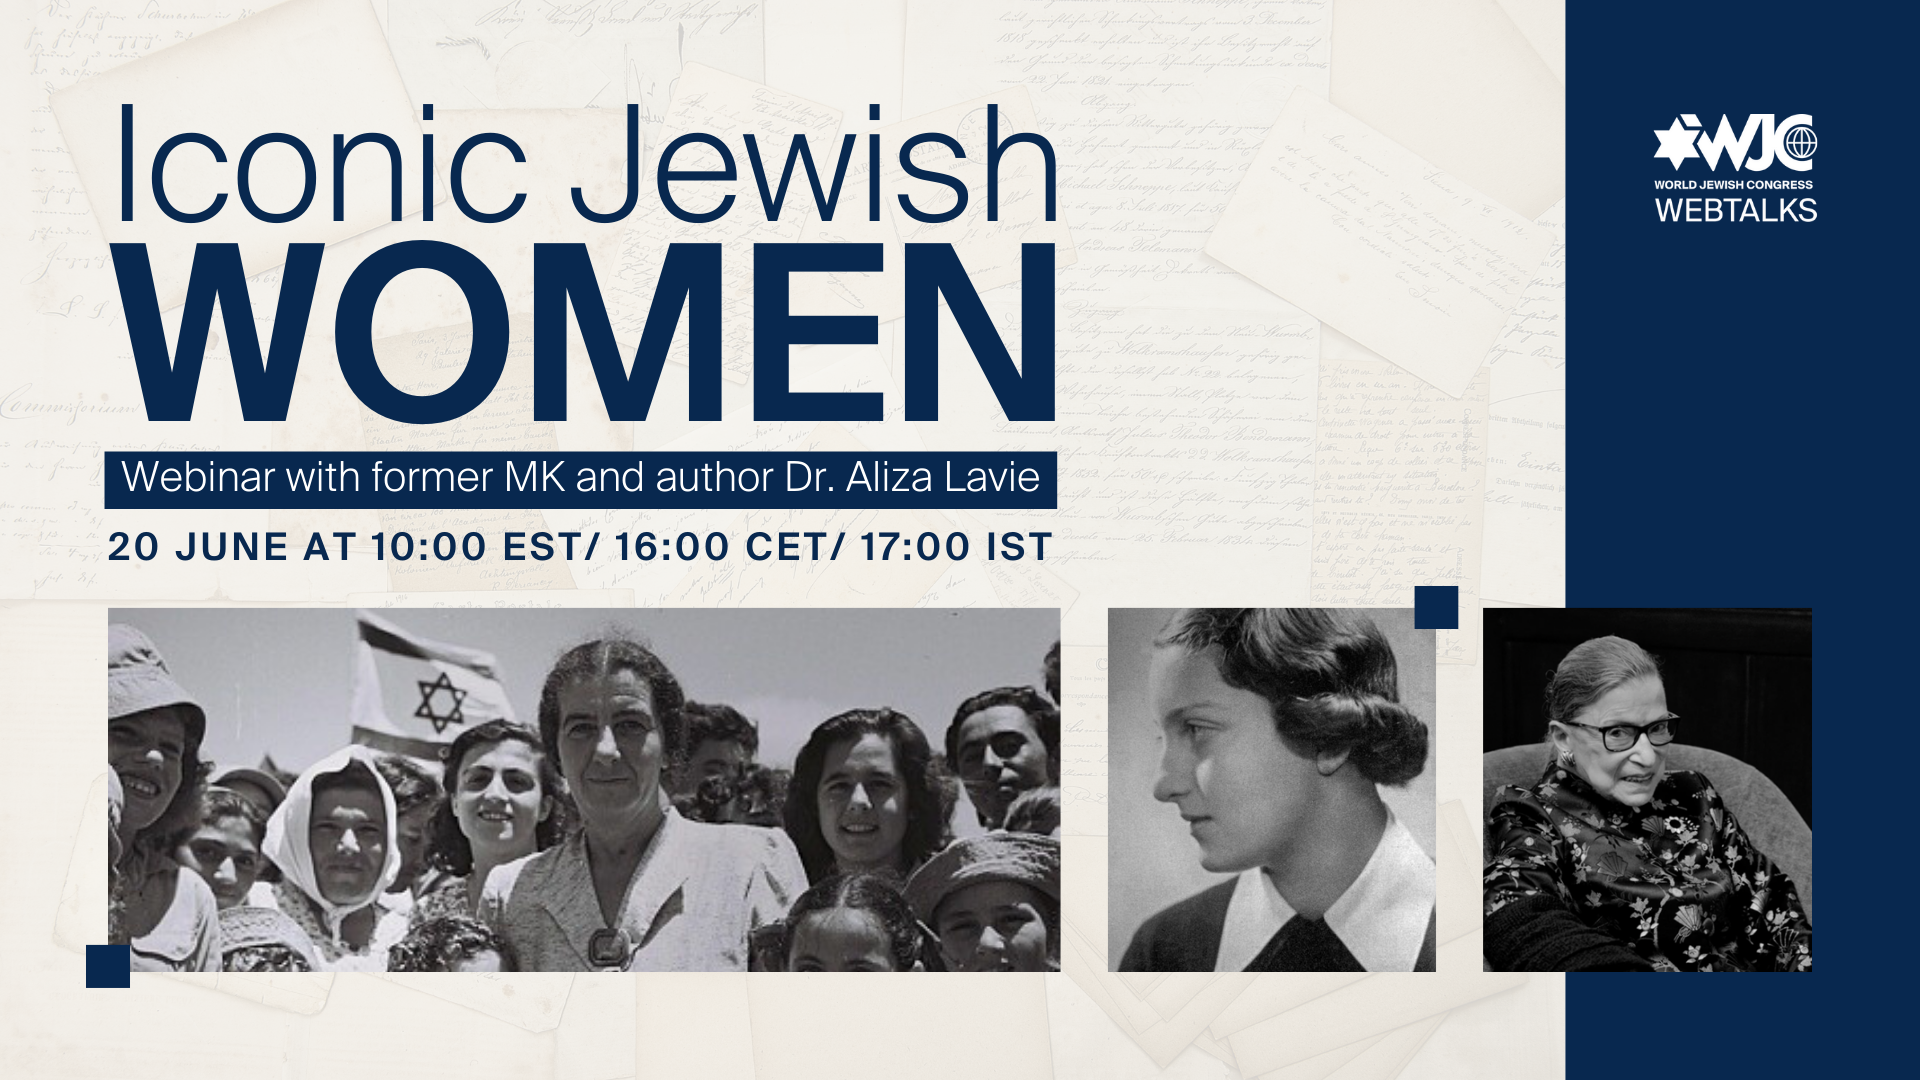 Iconic Jewish Women - World Jewish Congress